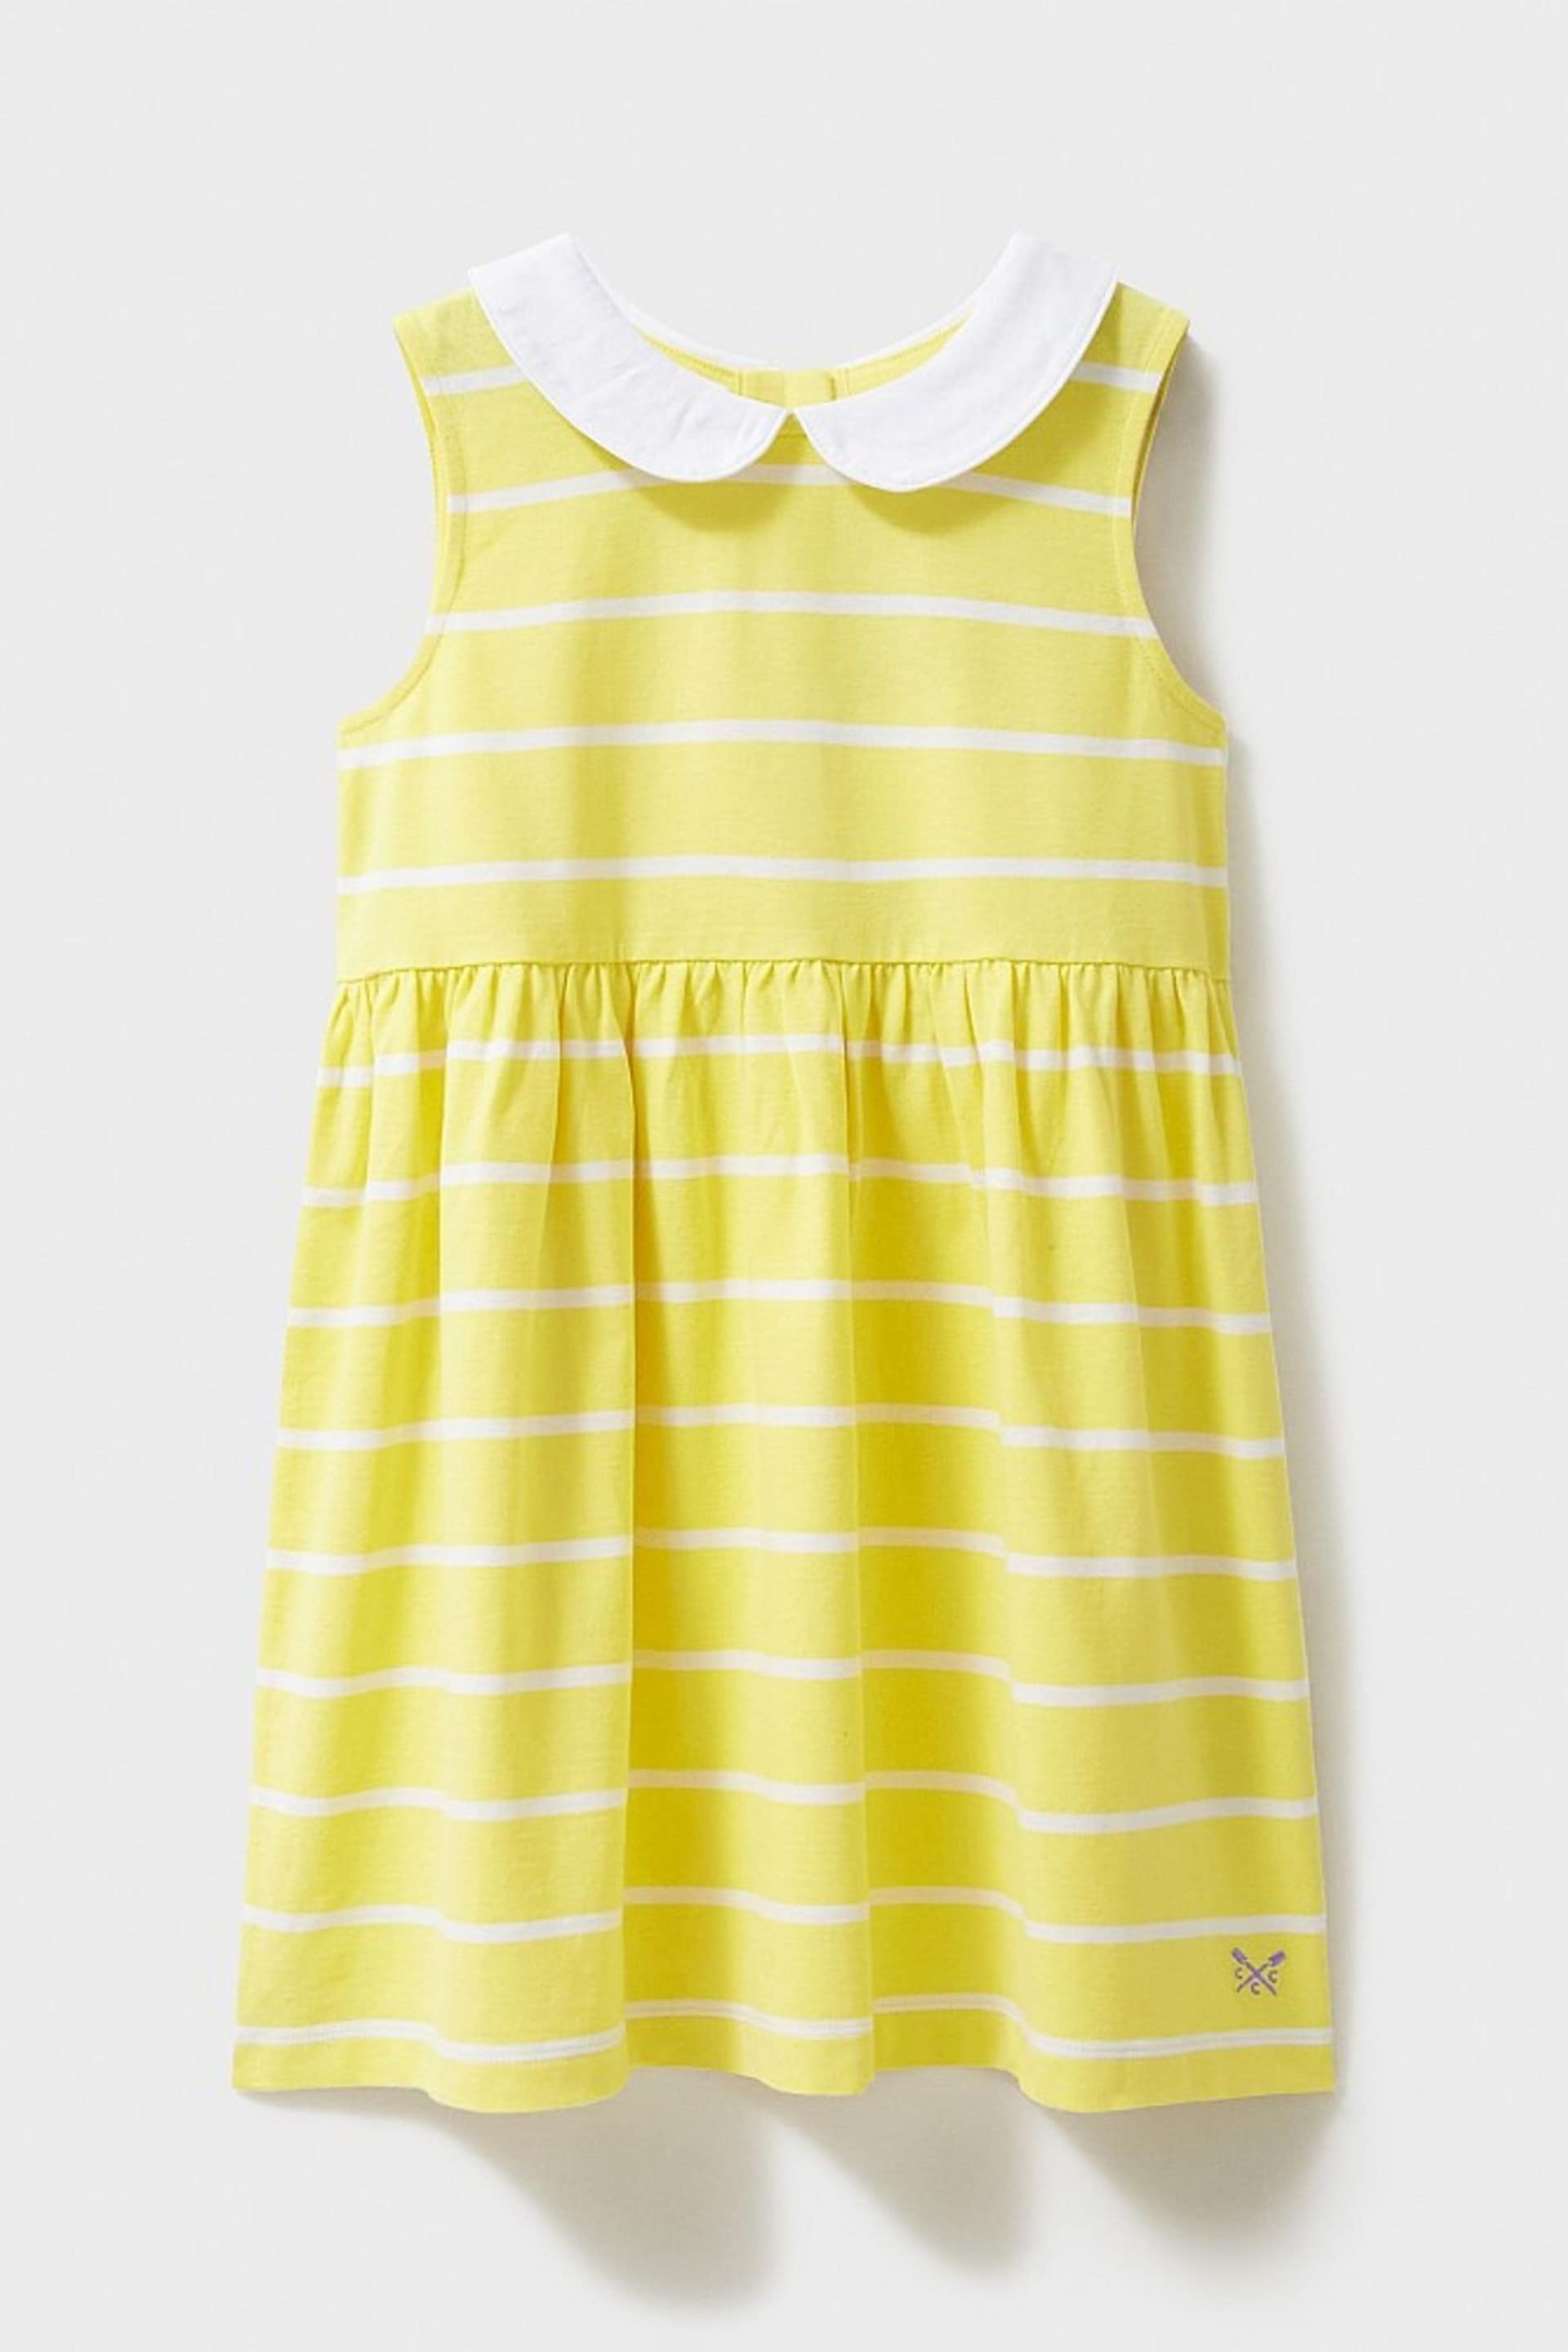 Crew Clothing Company Multi Yellow Stripe Cotton Sundress - Image 1 of 3